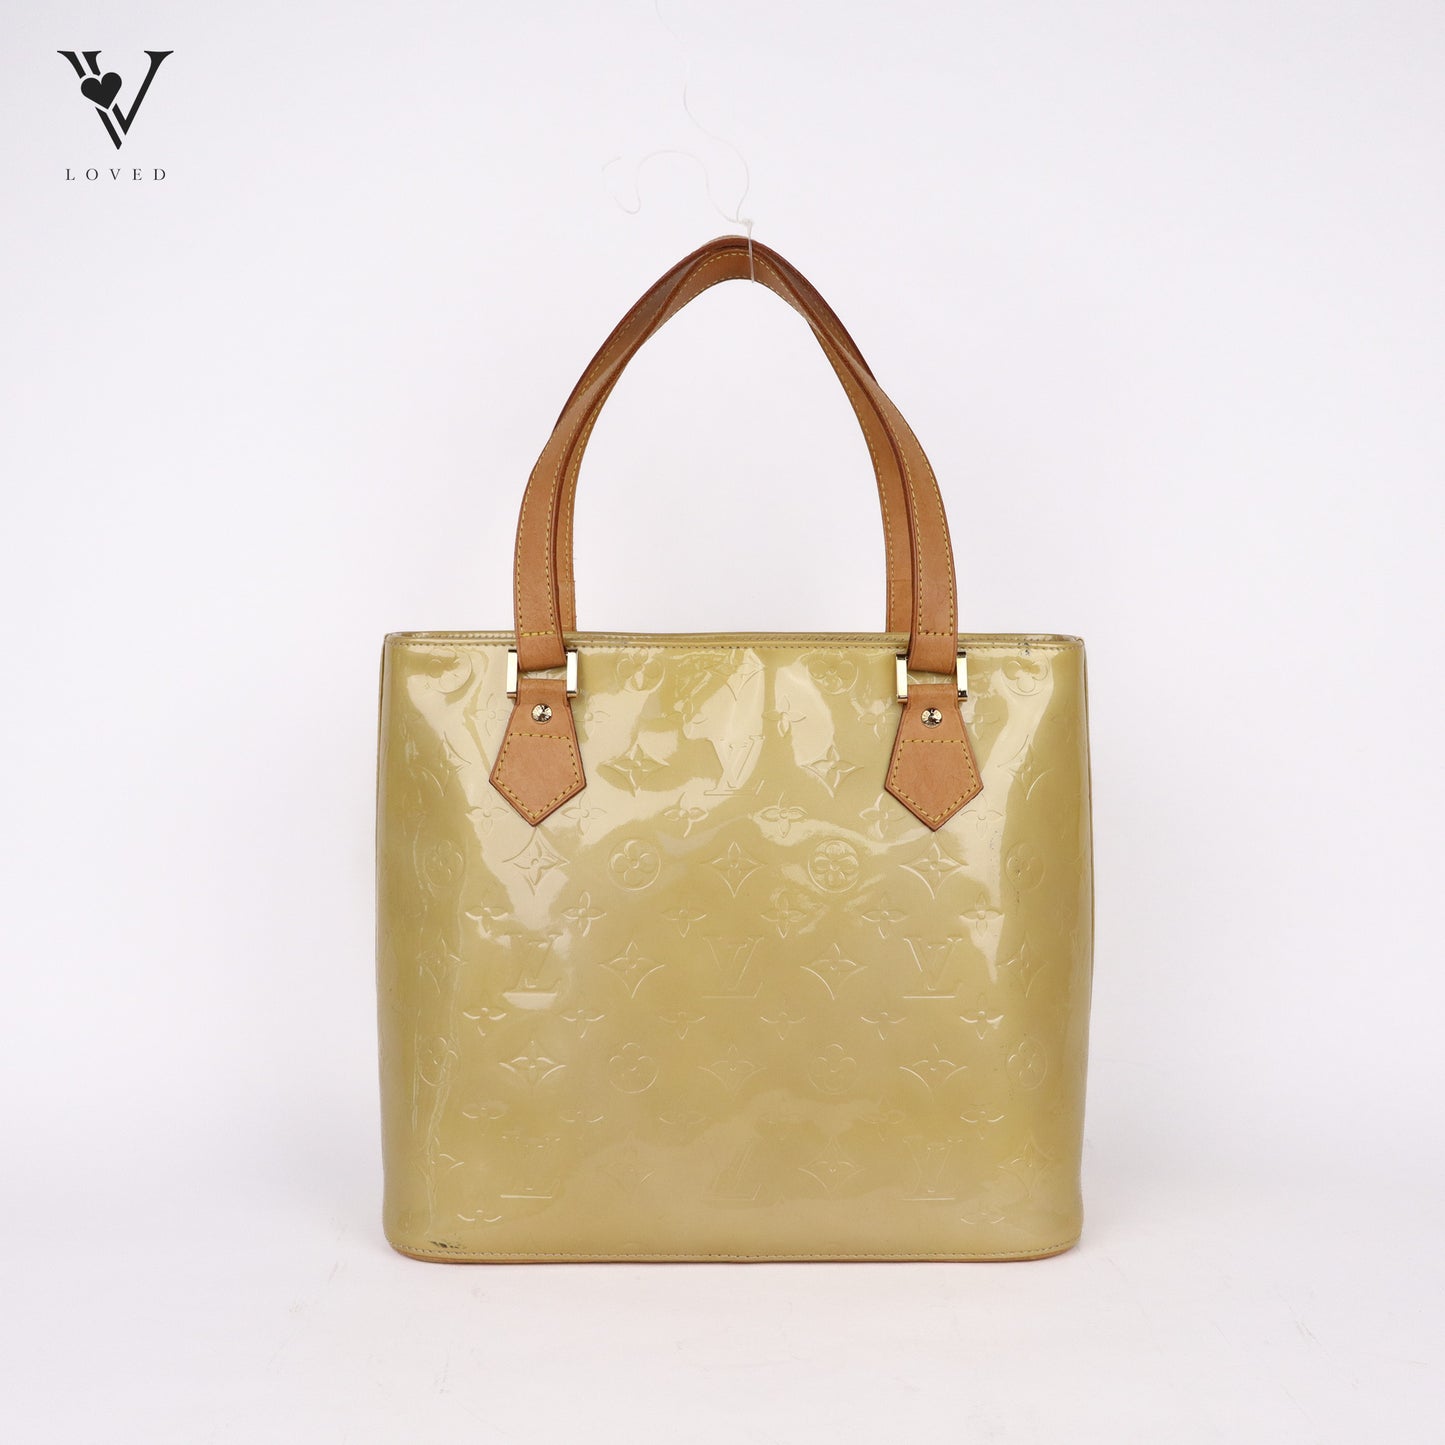 Houston handbag in Citrine Vernis Leather